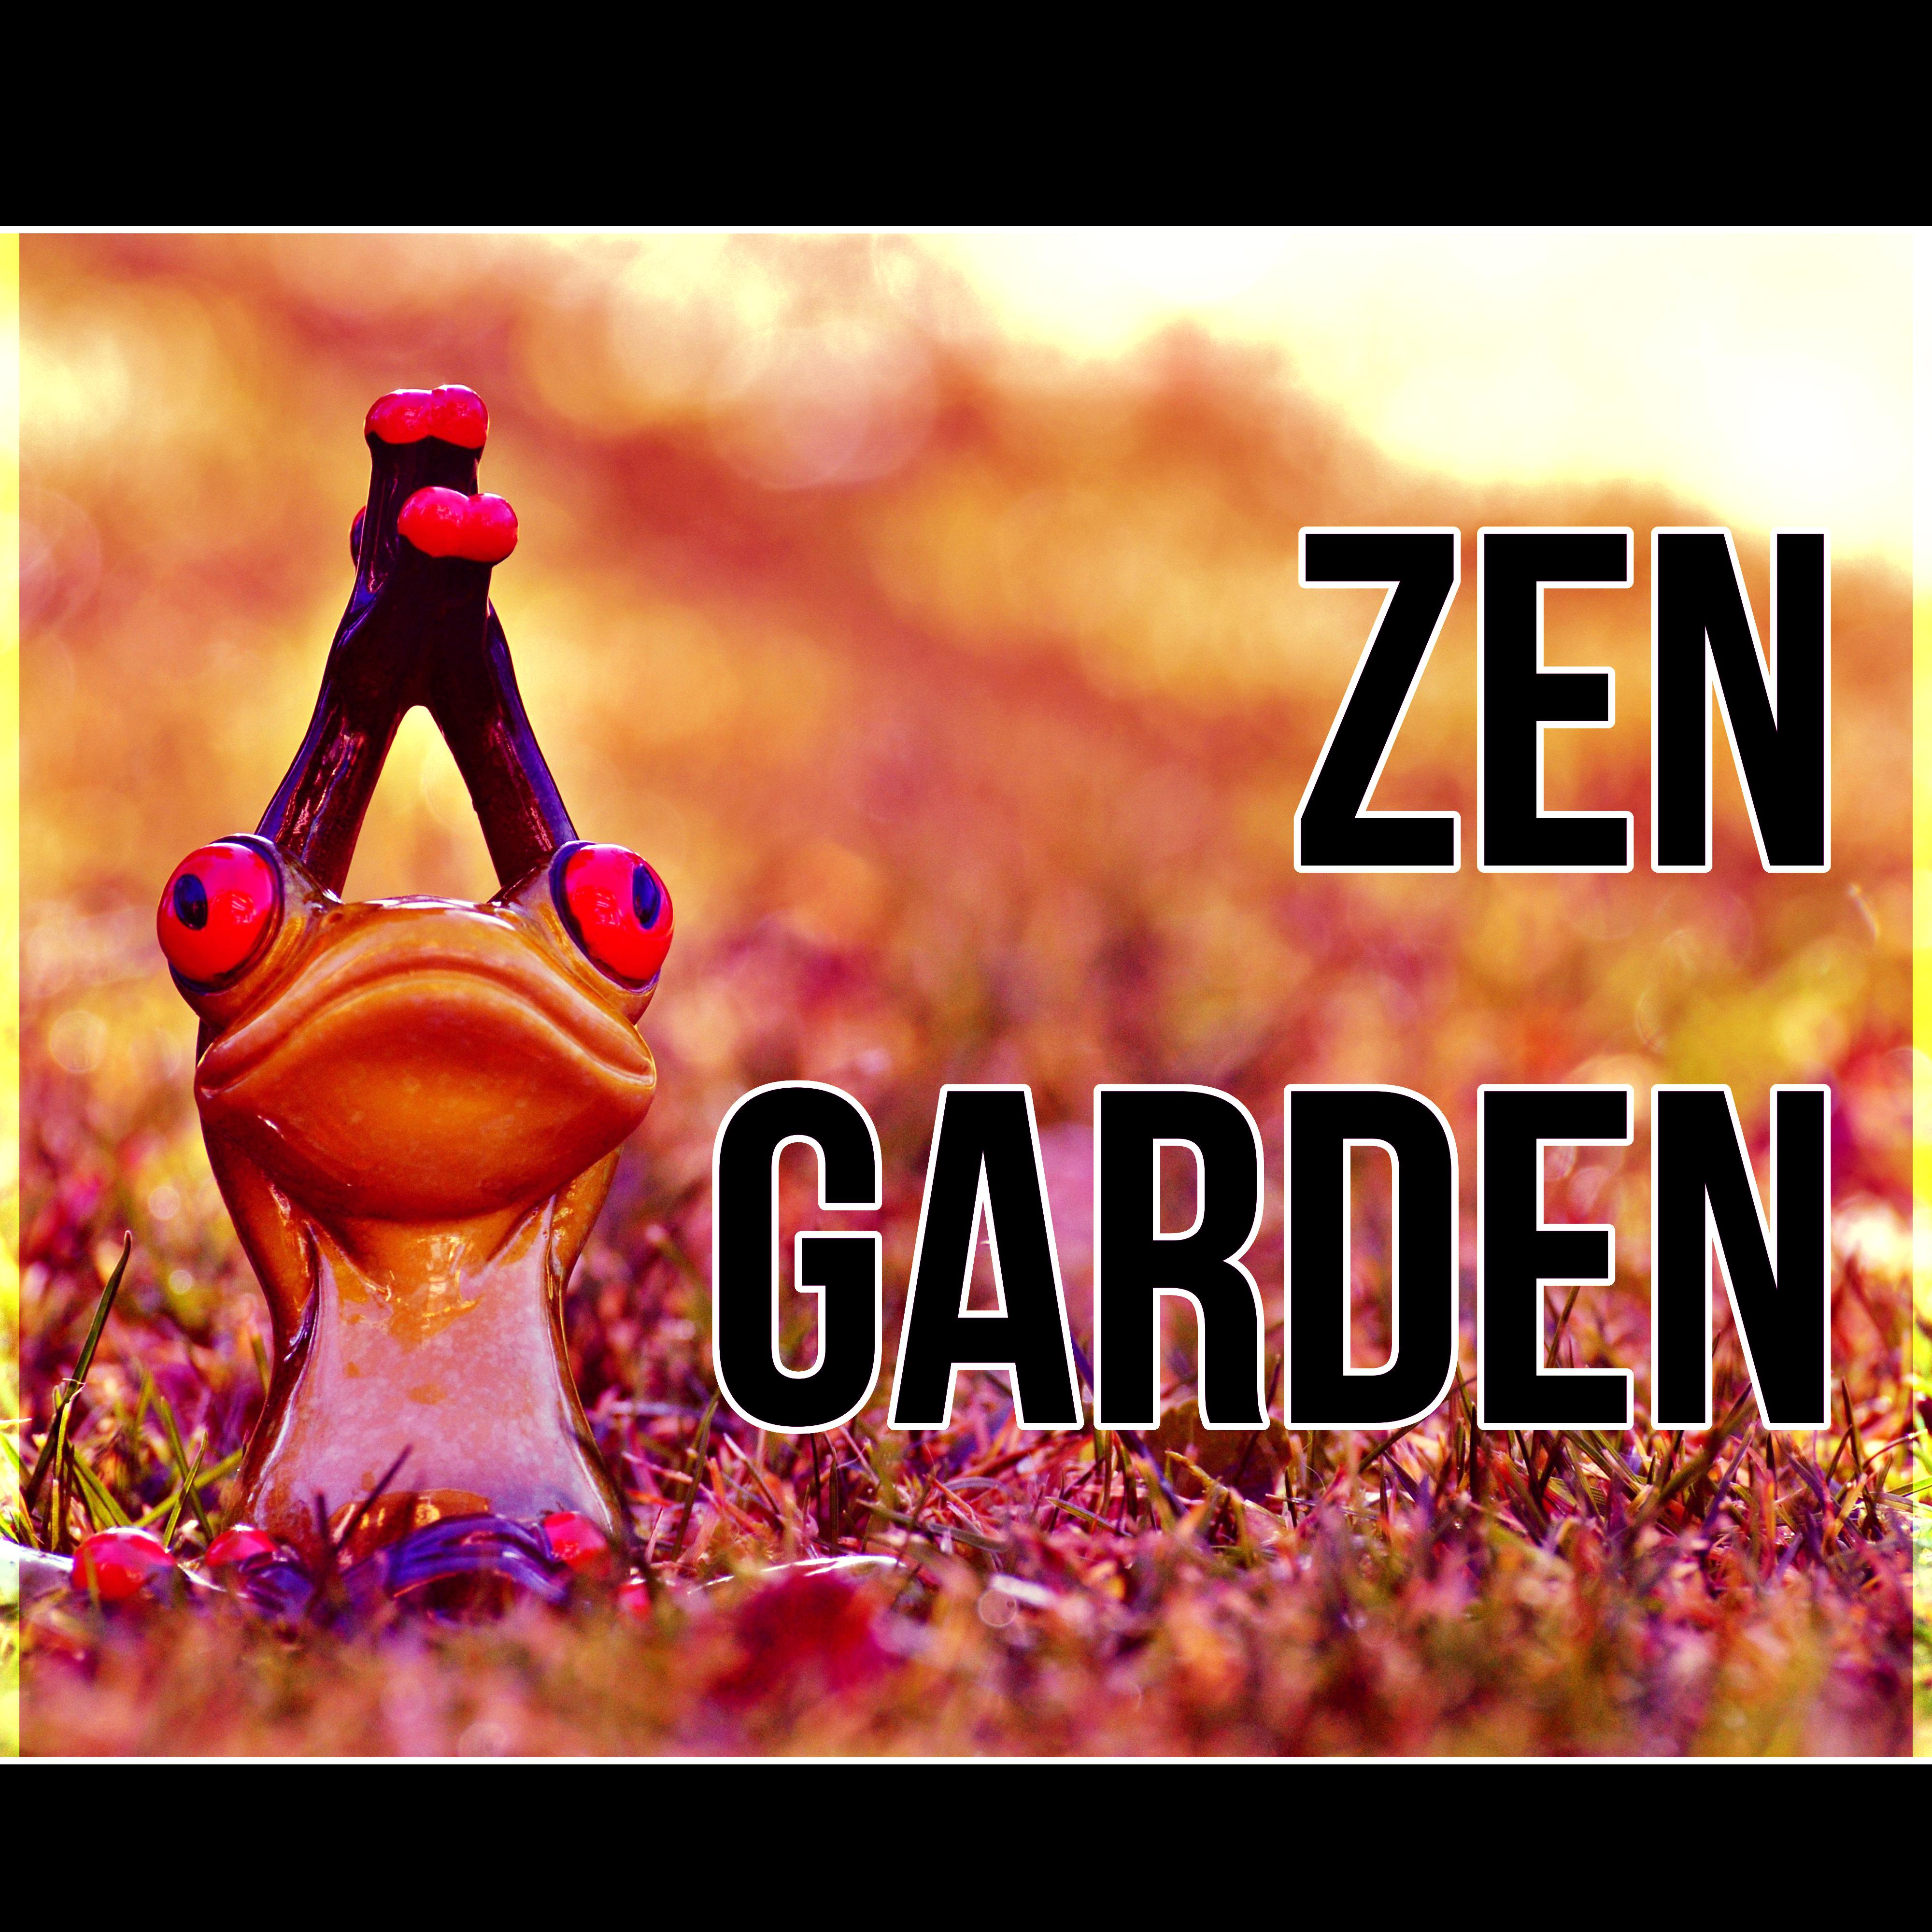 Zen Garden  Basic Transcendental Meditation for Beginners with Nature Sounds, Ocean Sounds for Yoga Class  Mindfulness Meditation, Zen, Reiki, Sleep